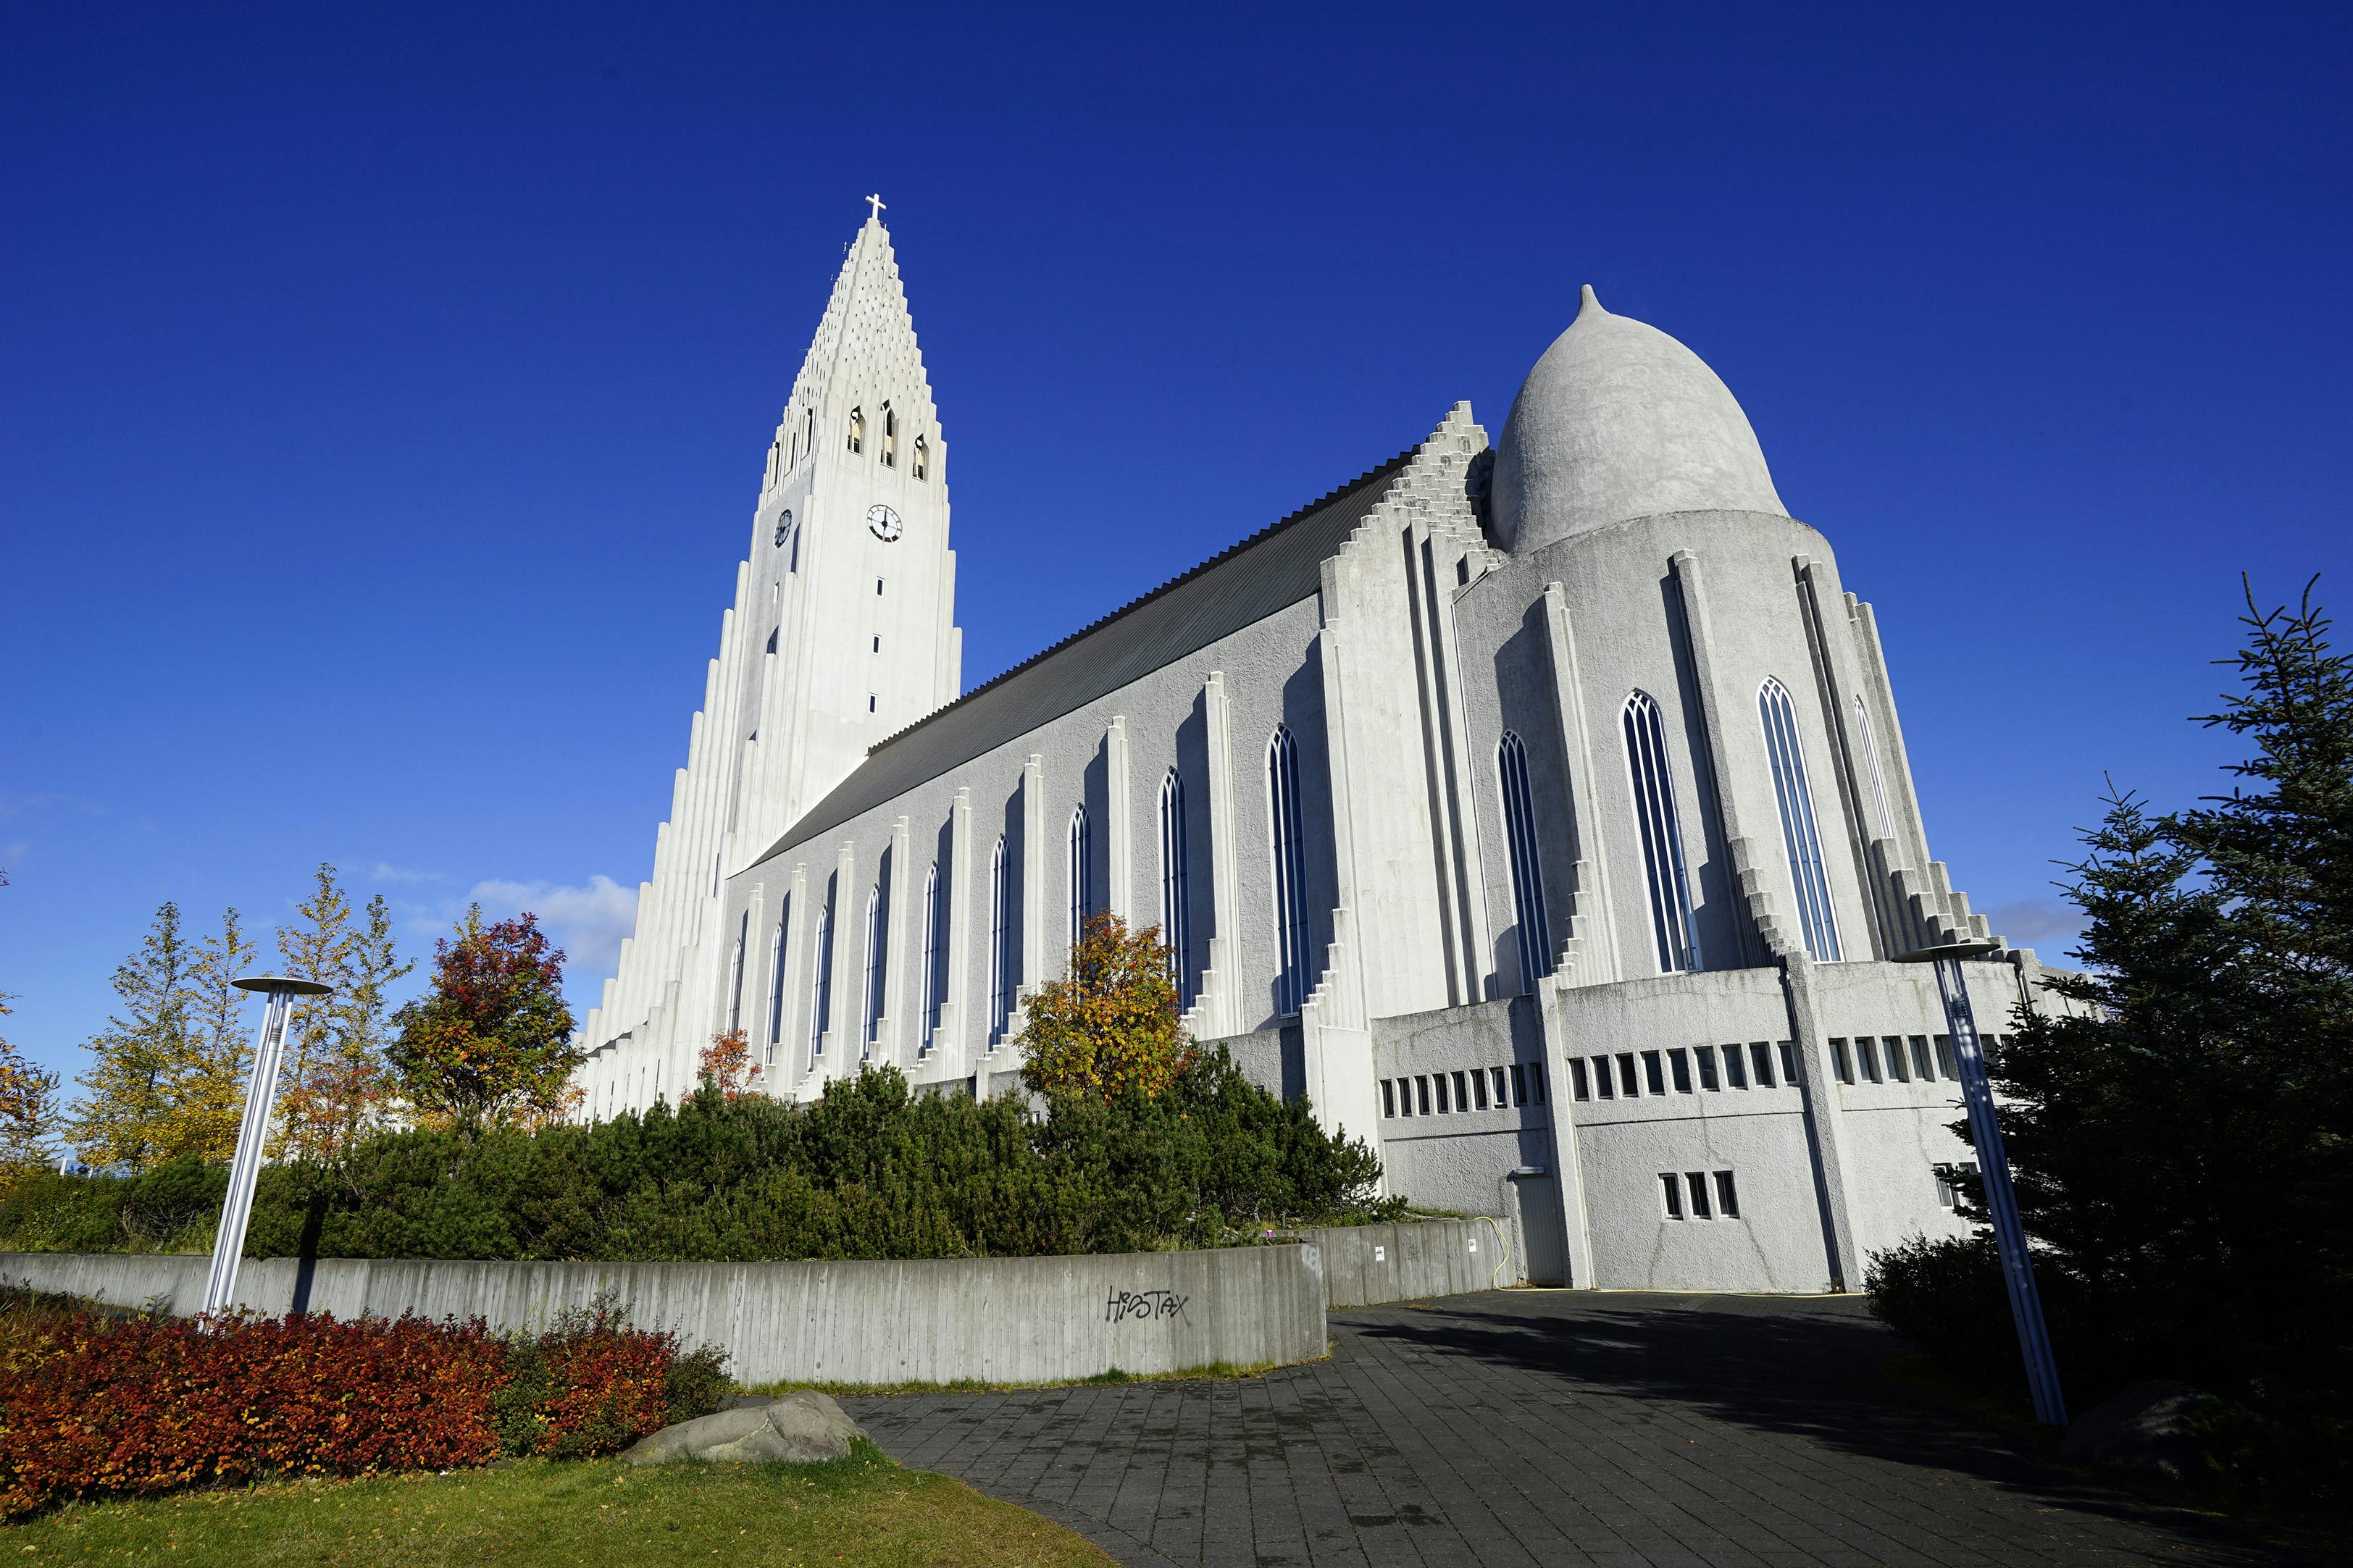 reykjavik tourism office